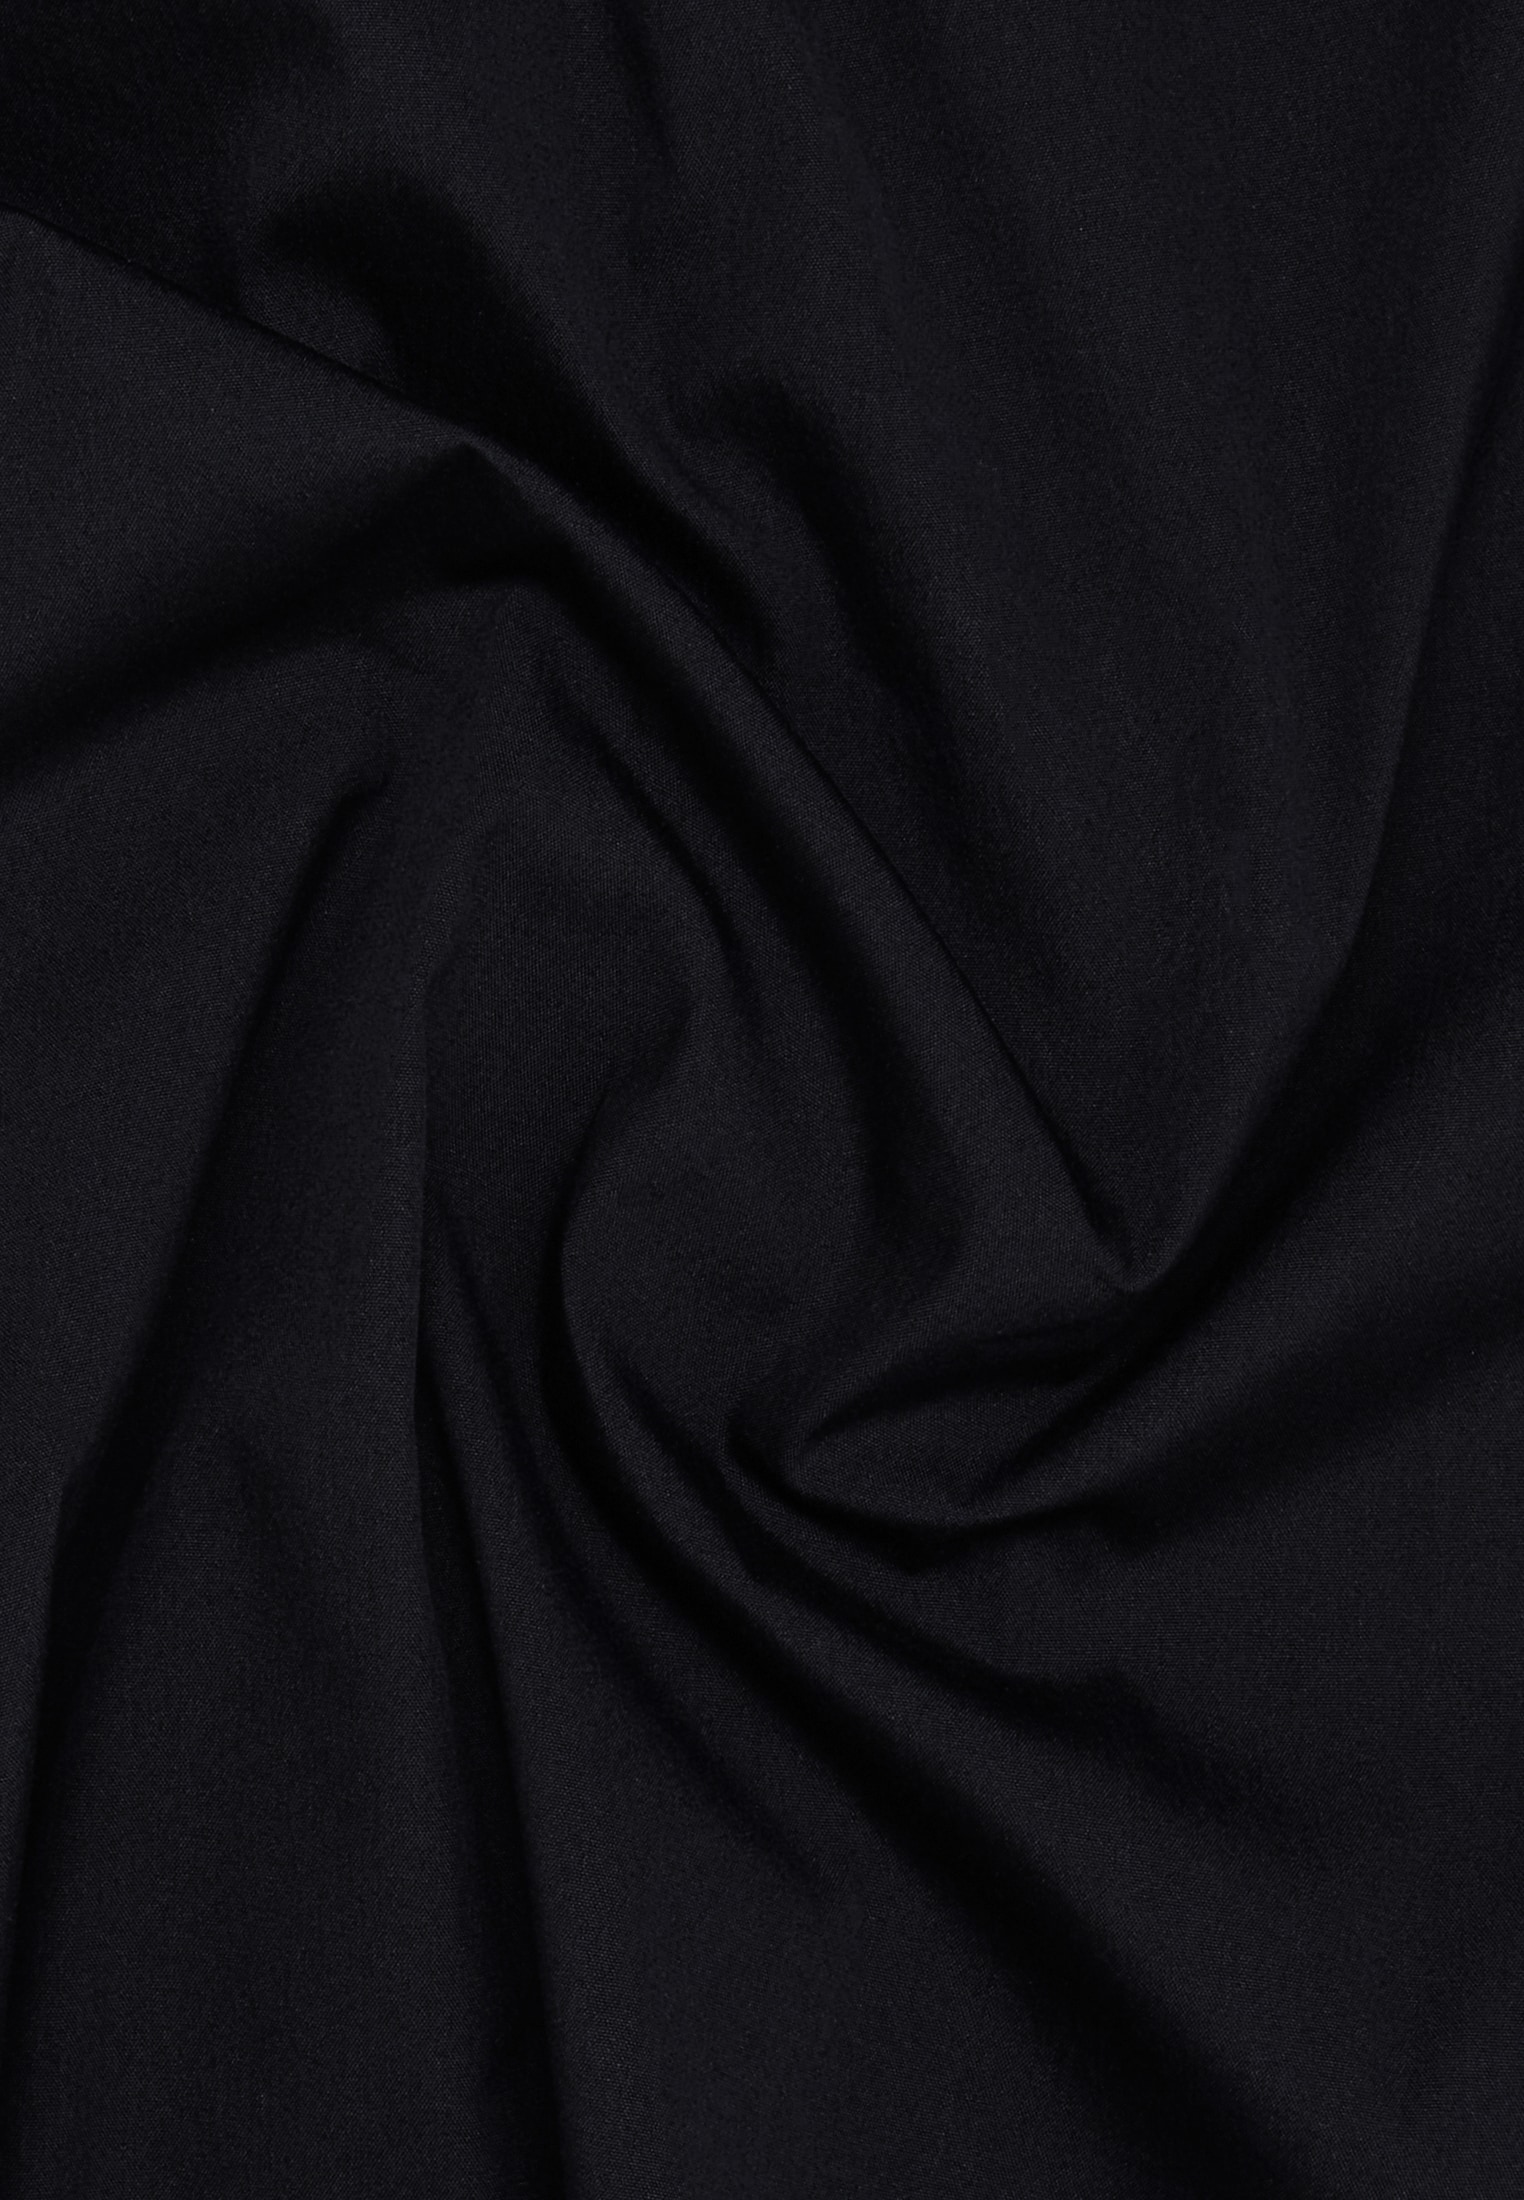 Signature Shirt Blouse in black plain